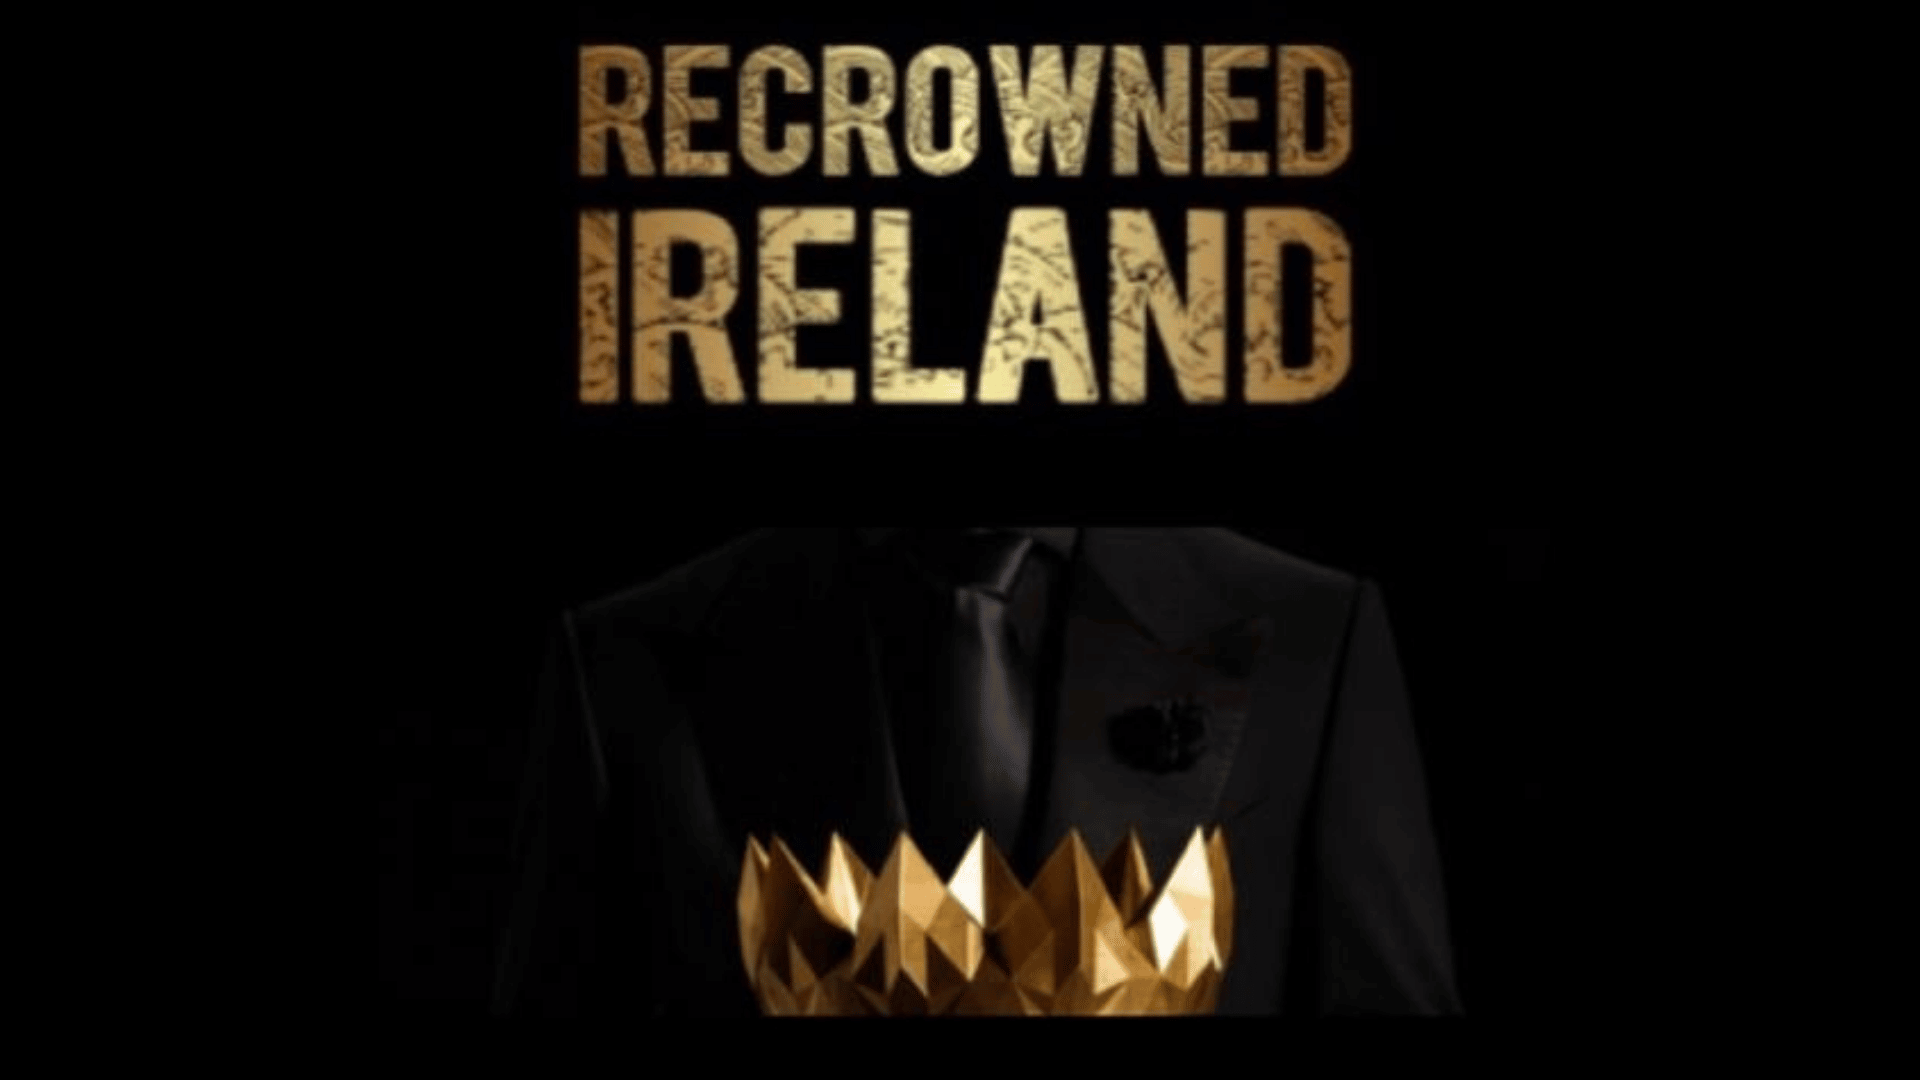 Recrowned Ireland logo